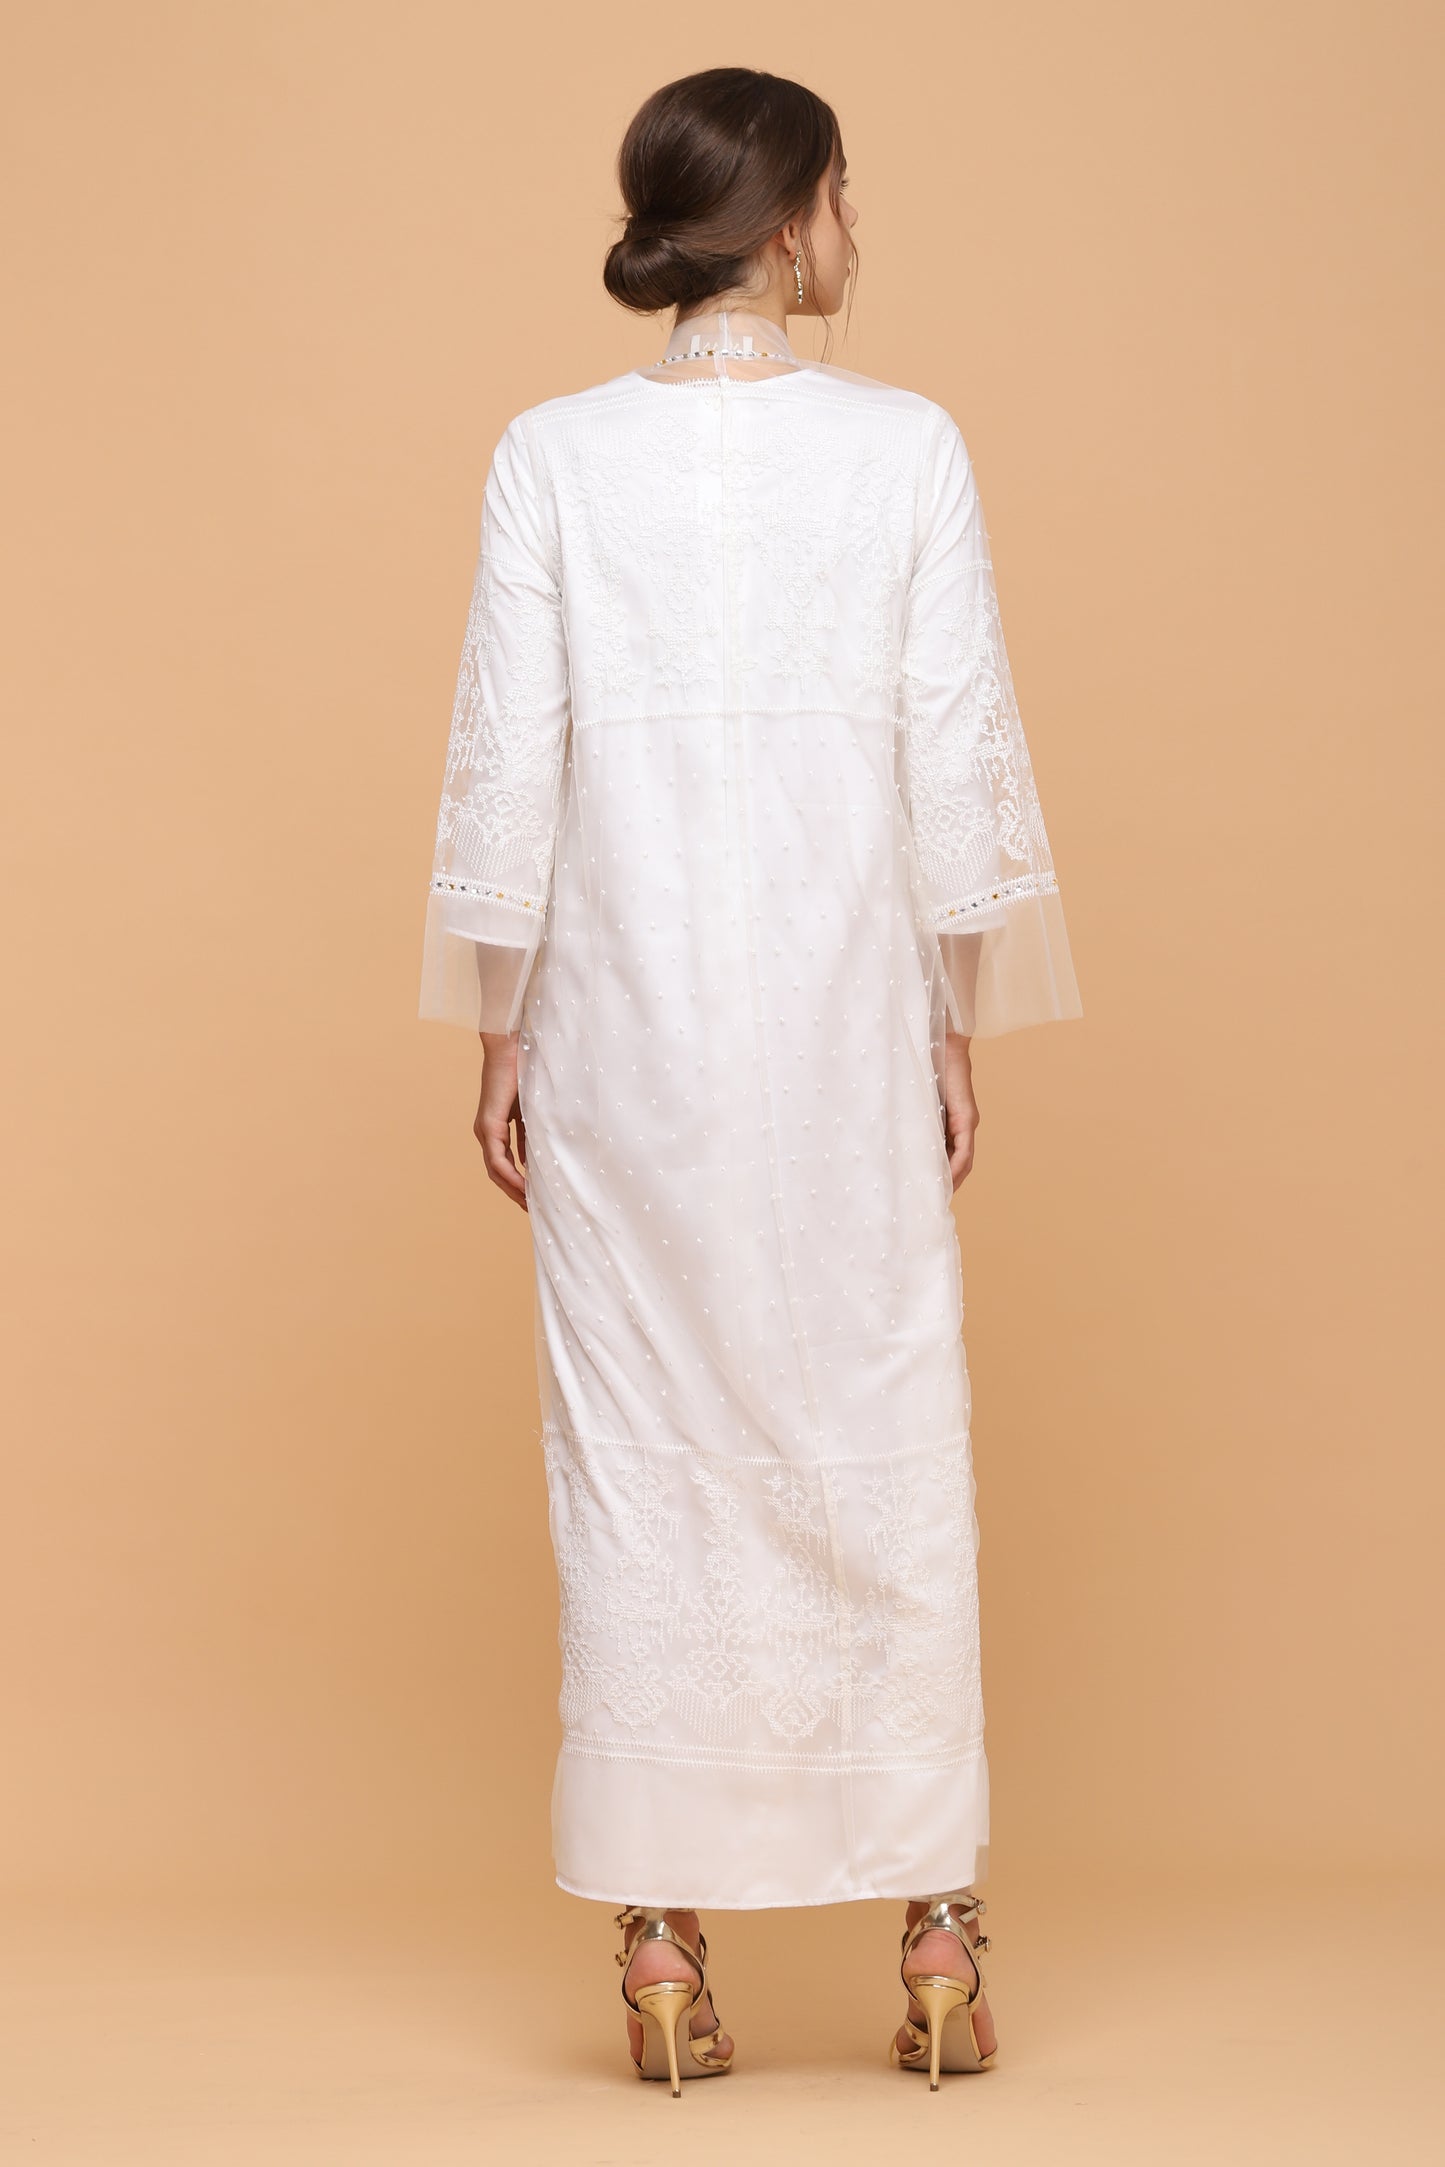 Humble - Soft Ethnic White Lace Kaftan